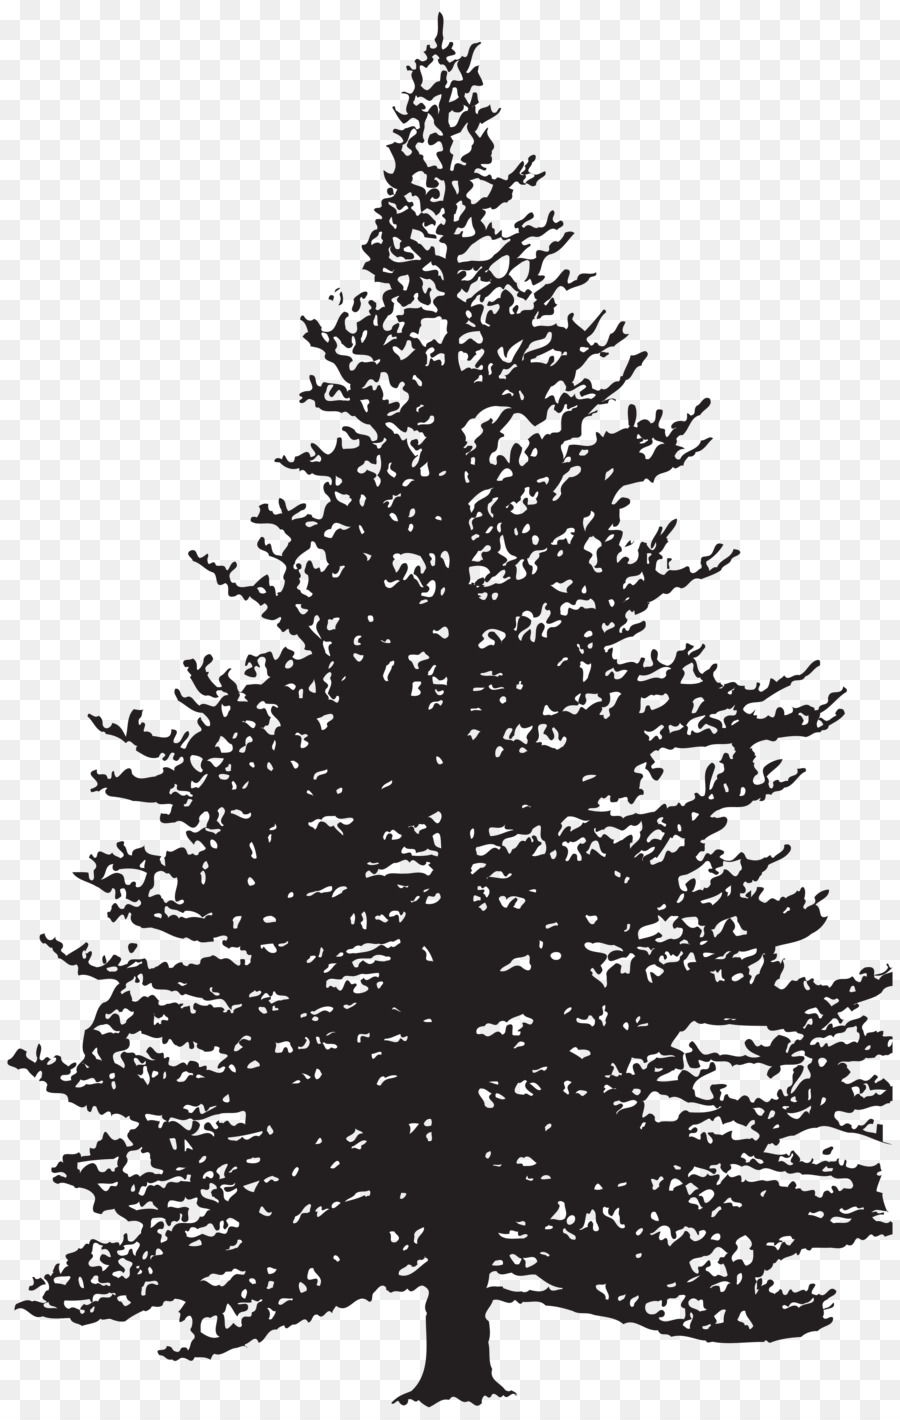 Clip art Fir Drawing Pine Image - tree png download - 5074*8000 - Free Transparent Fir png Download.